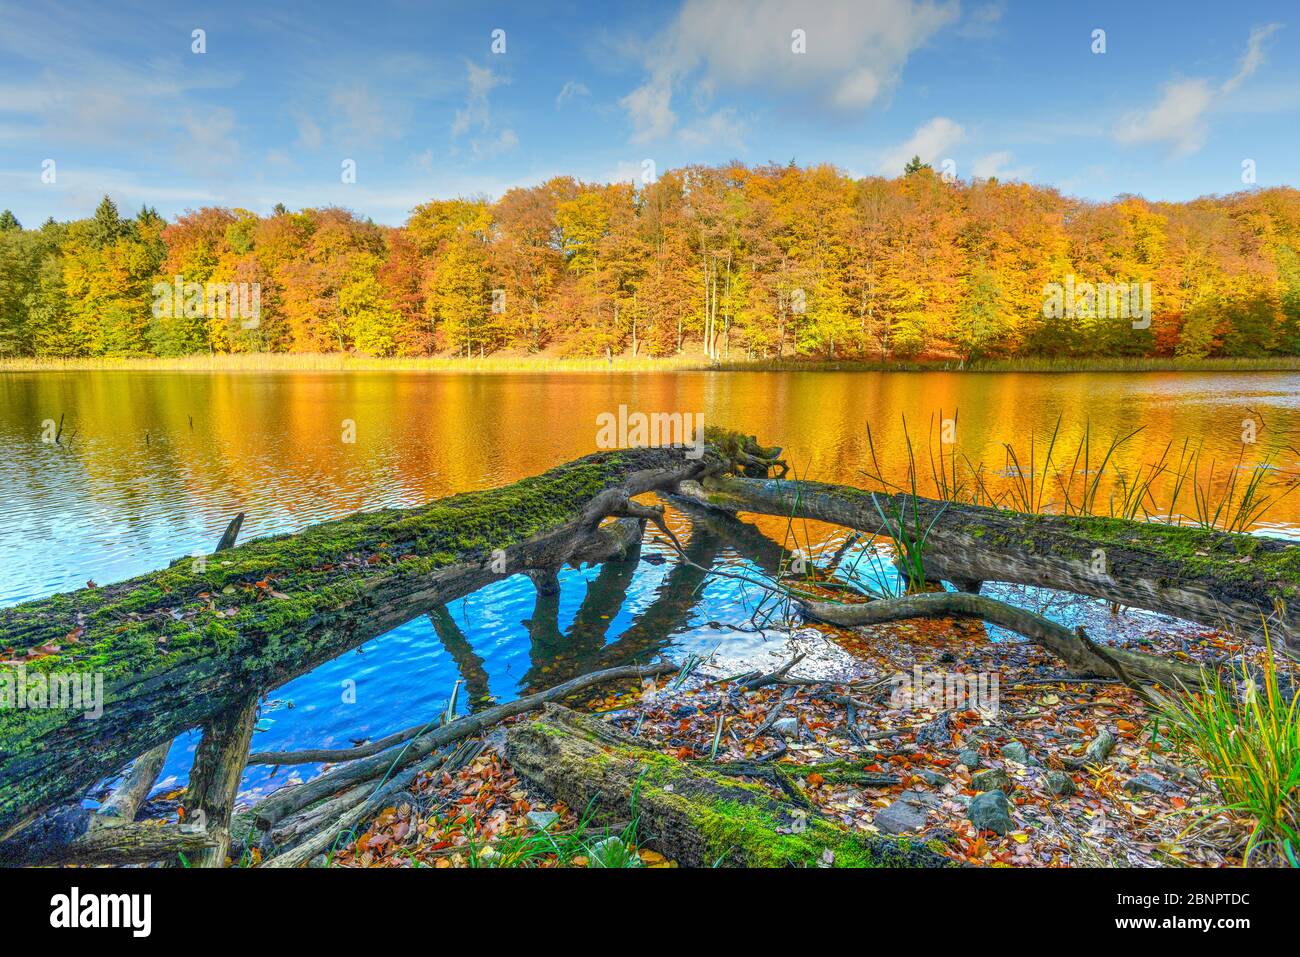 Autumn in the beech forest Grumsin,UNESCO world heritage, Angermünde, Uckermark, Brandenburg, Germany Stock Photo